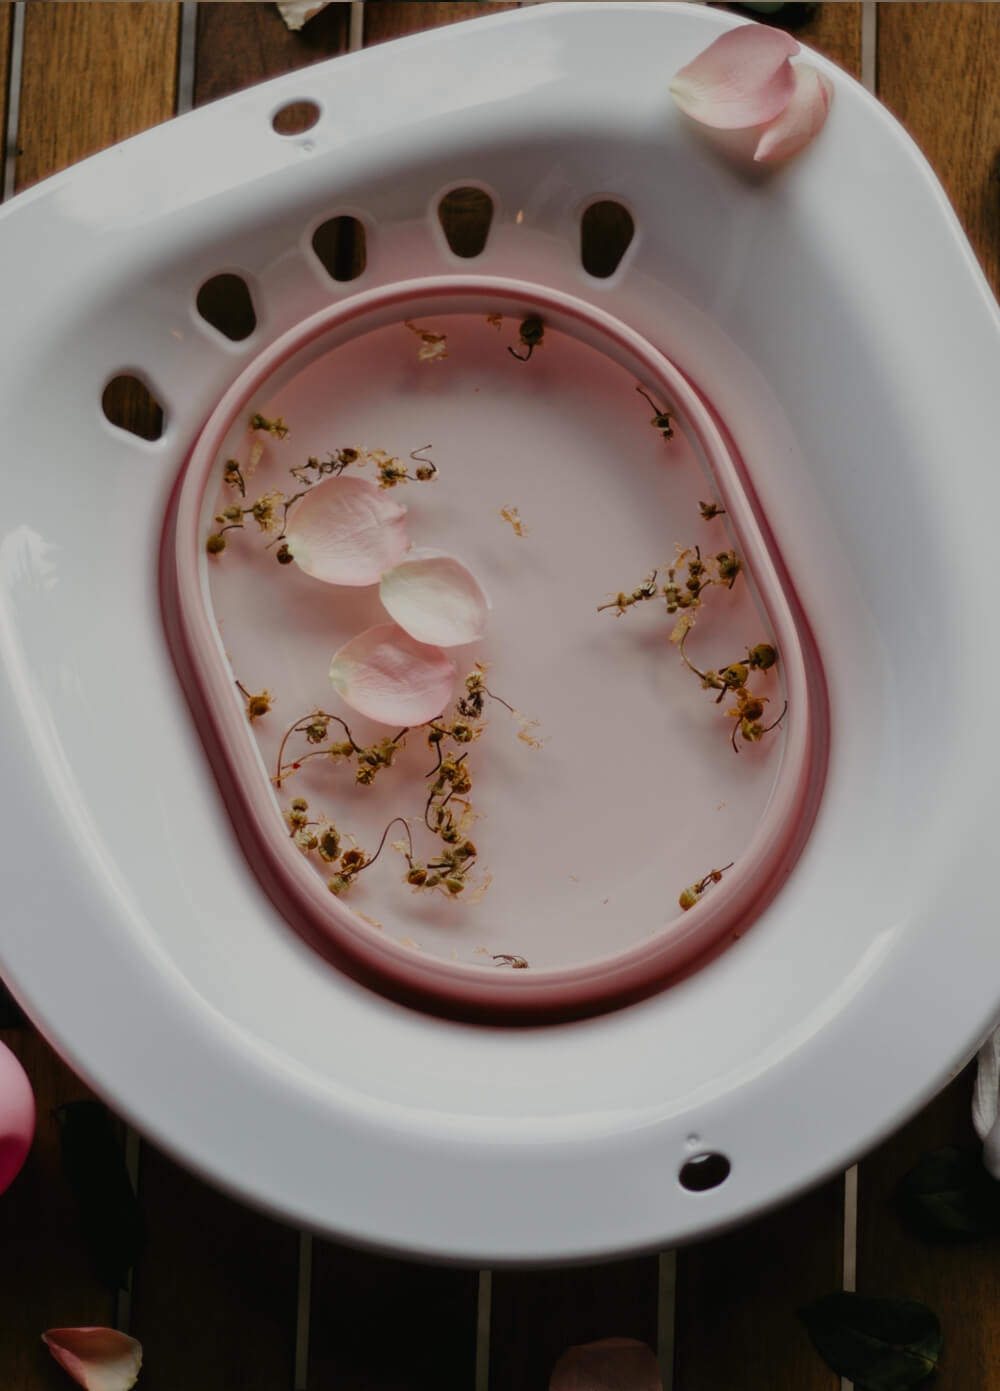 Sitz Bath Tub for Postpartum Care | Queen Bee